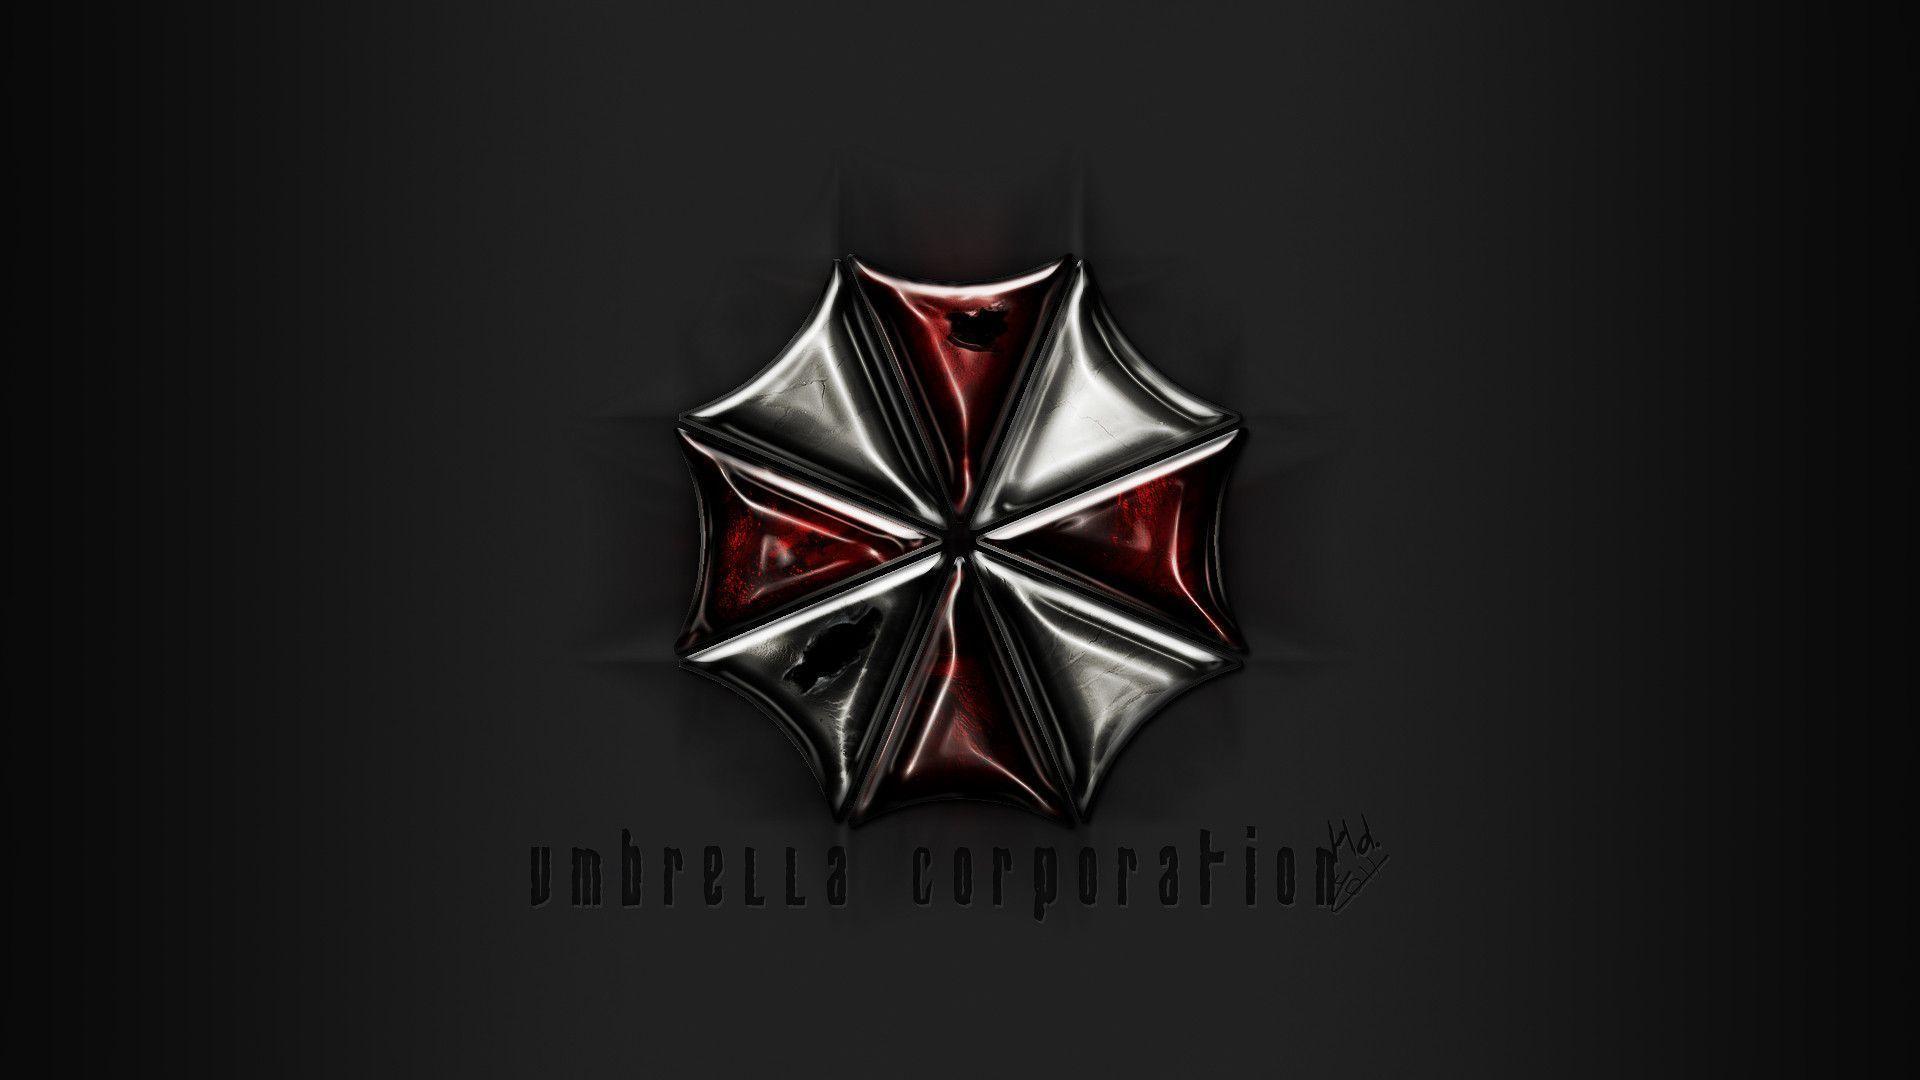 Umbrella Corporation Backgrounds